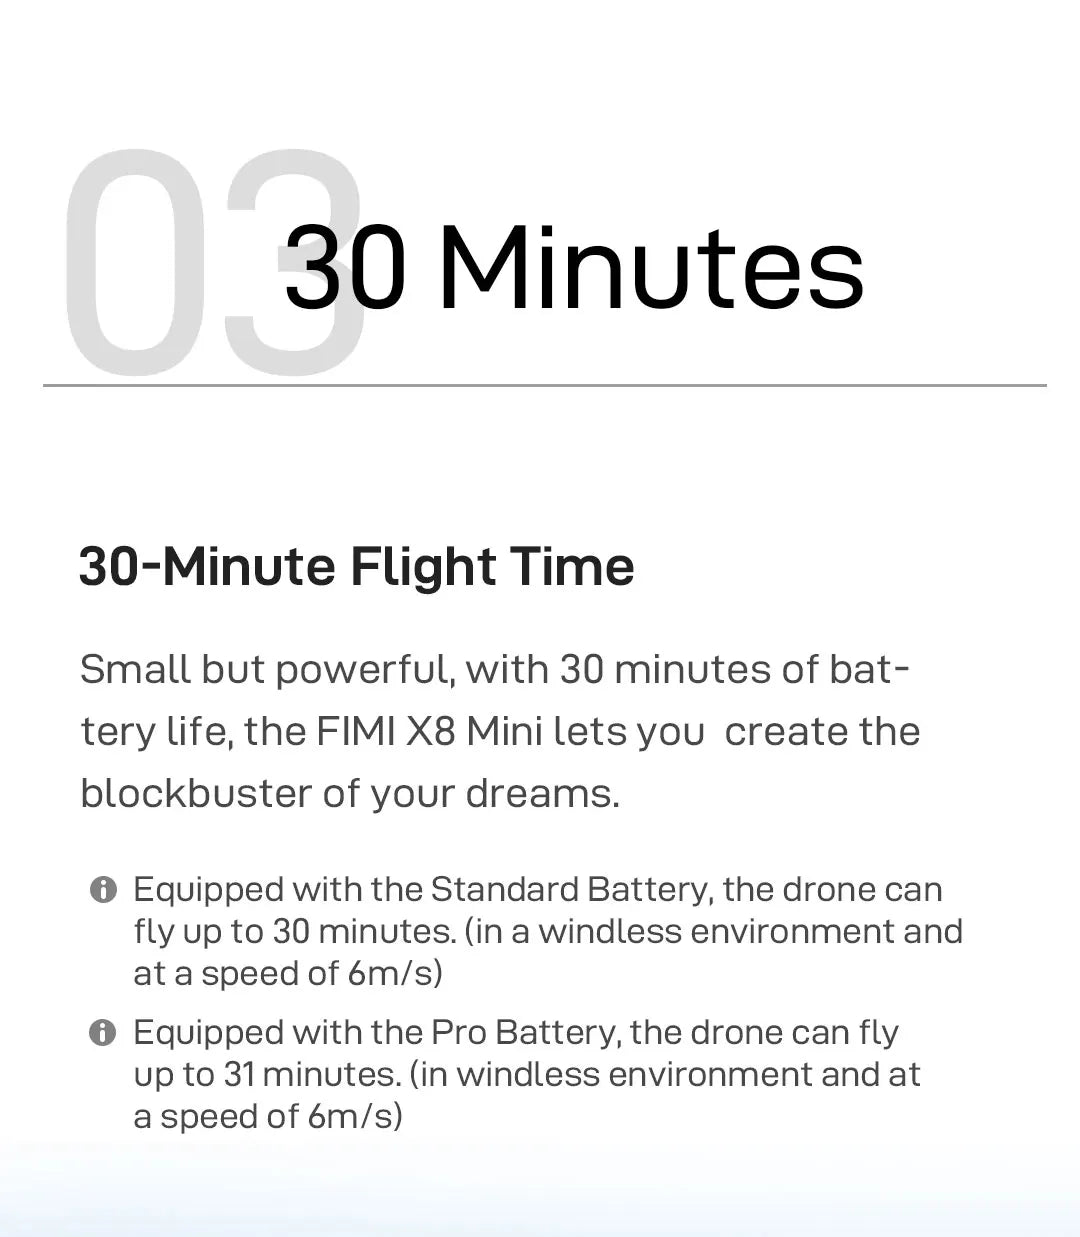 FIMI x8 Mini Drone, the FIMI X8 Mini lets YoU create the blockbuster of your dreams